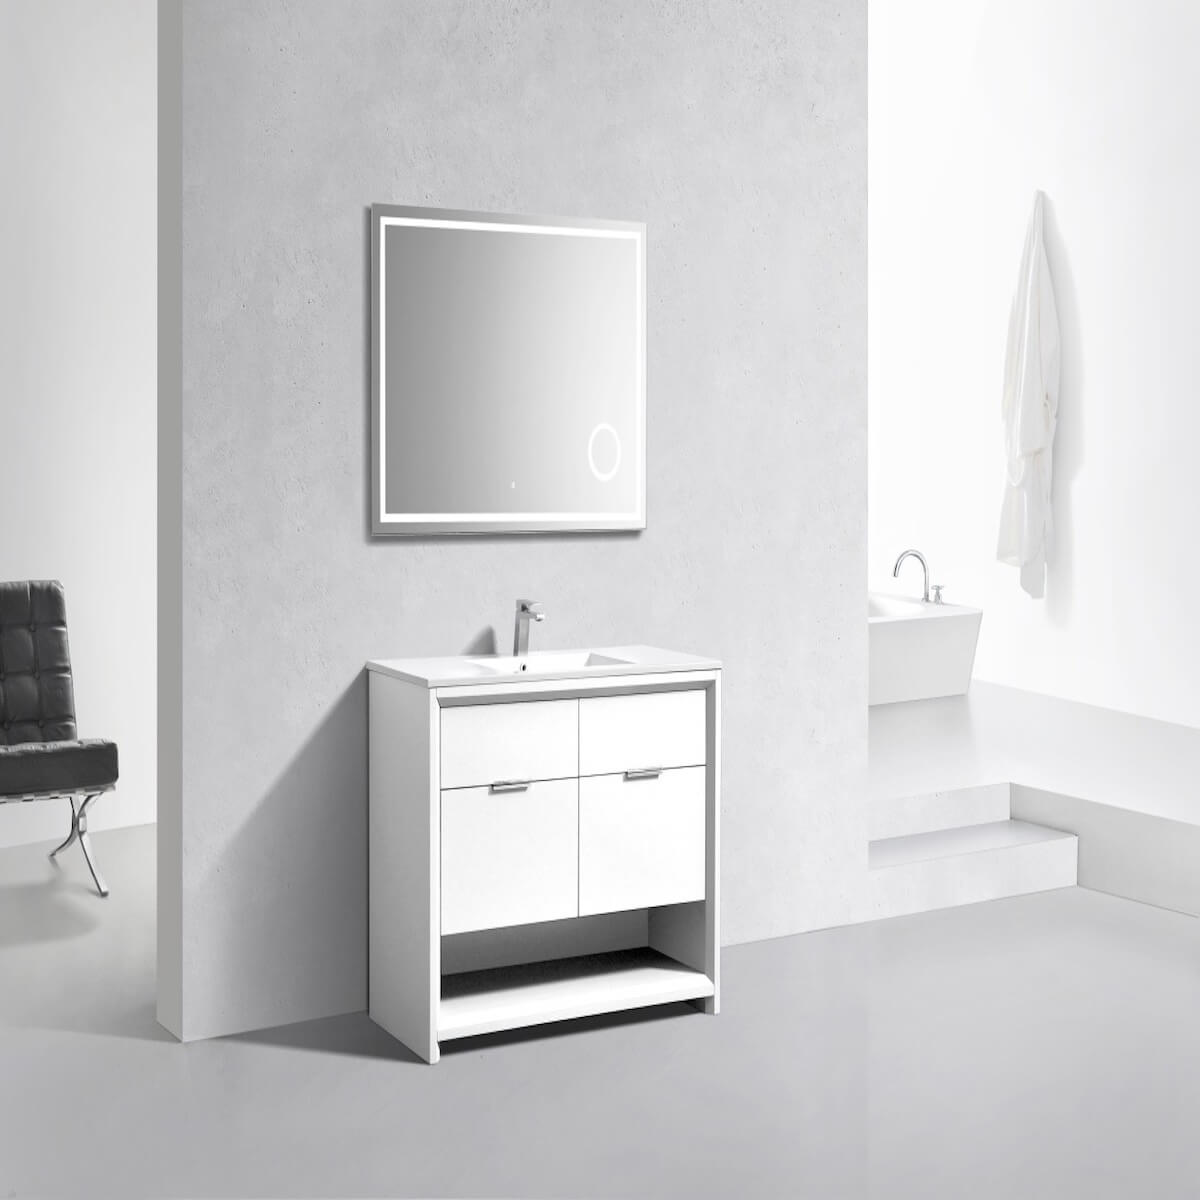 KubeBath Nudo 48” Gloss White Free Standing Modern Bathroom Single Sink Vanity Side in Bathroom NUDO48S-GW #finish_gloss white